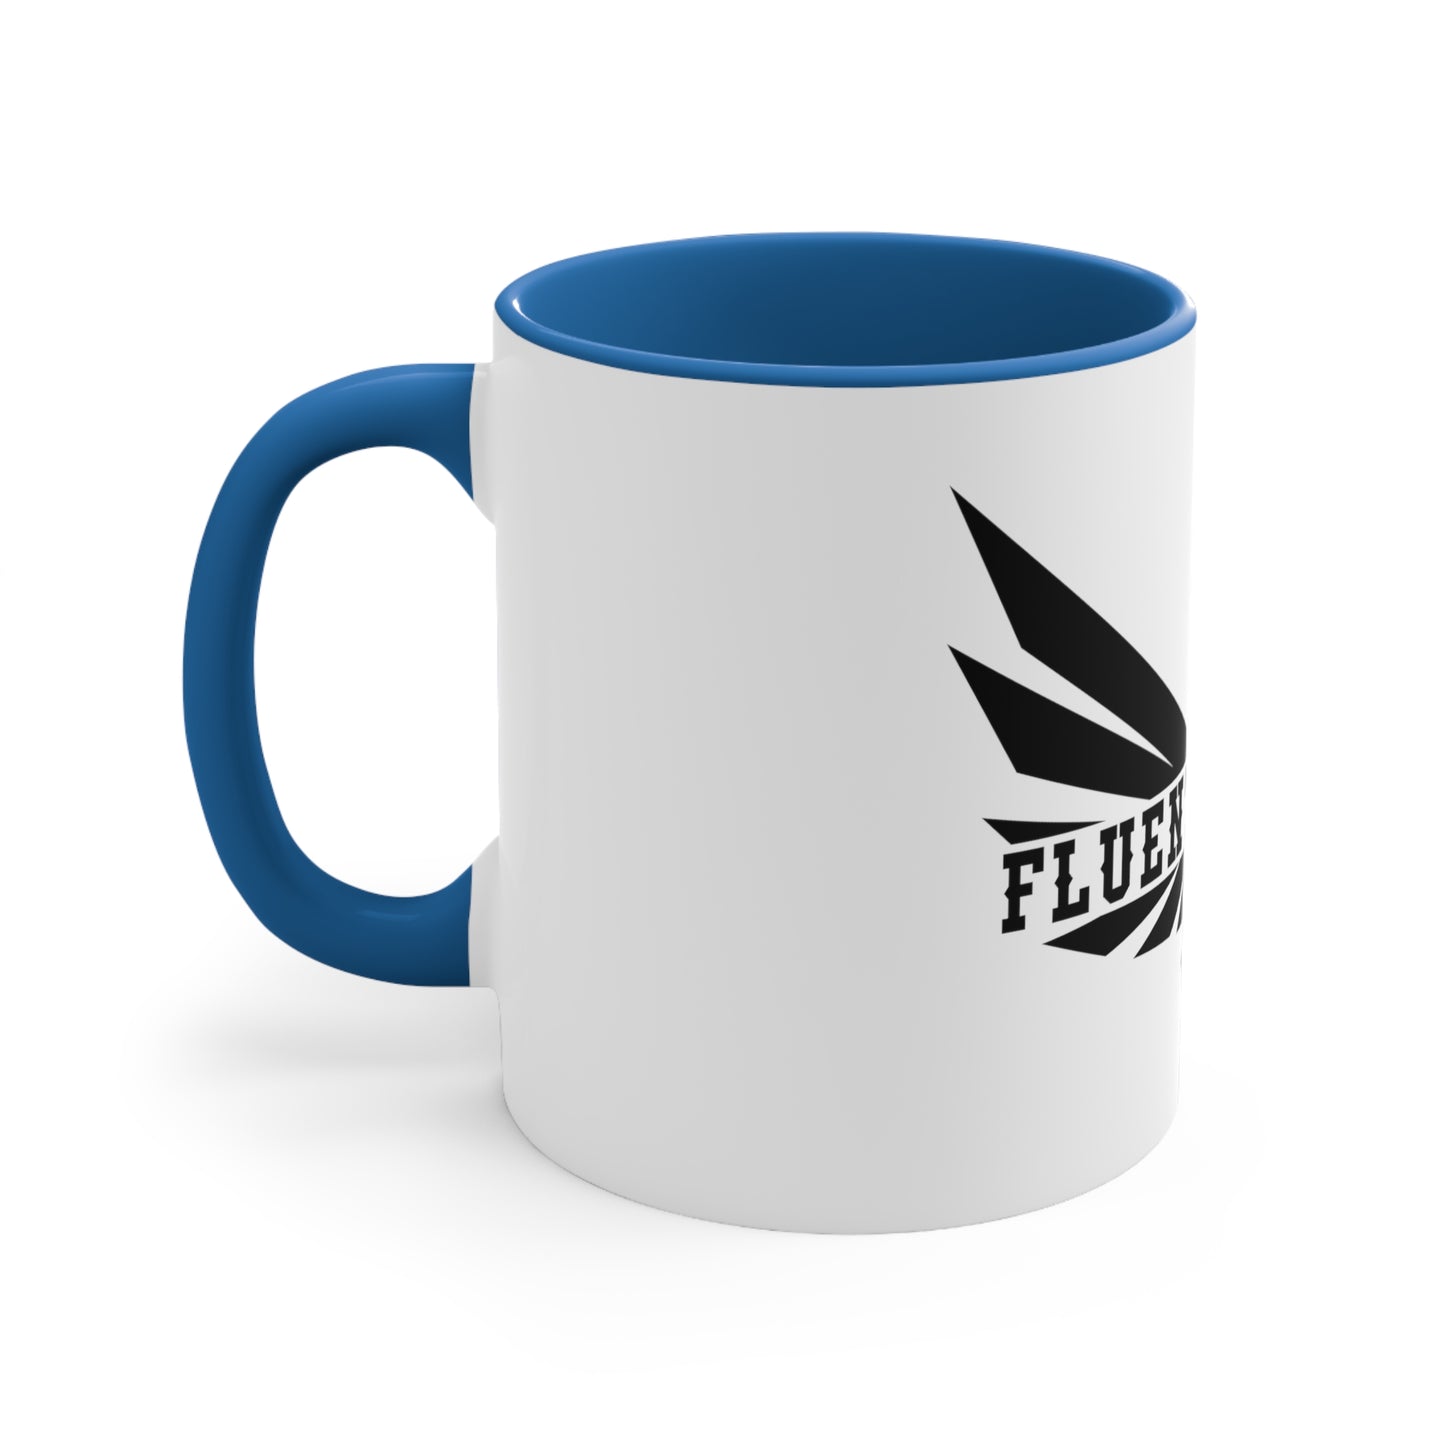 FLUENT COFFEE MUG Accent Coffee Mug, 11oz